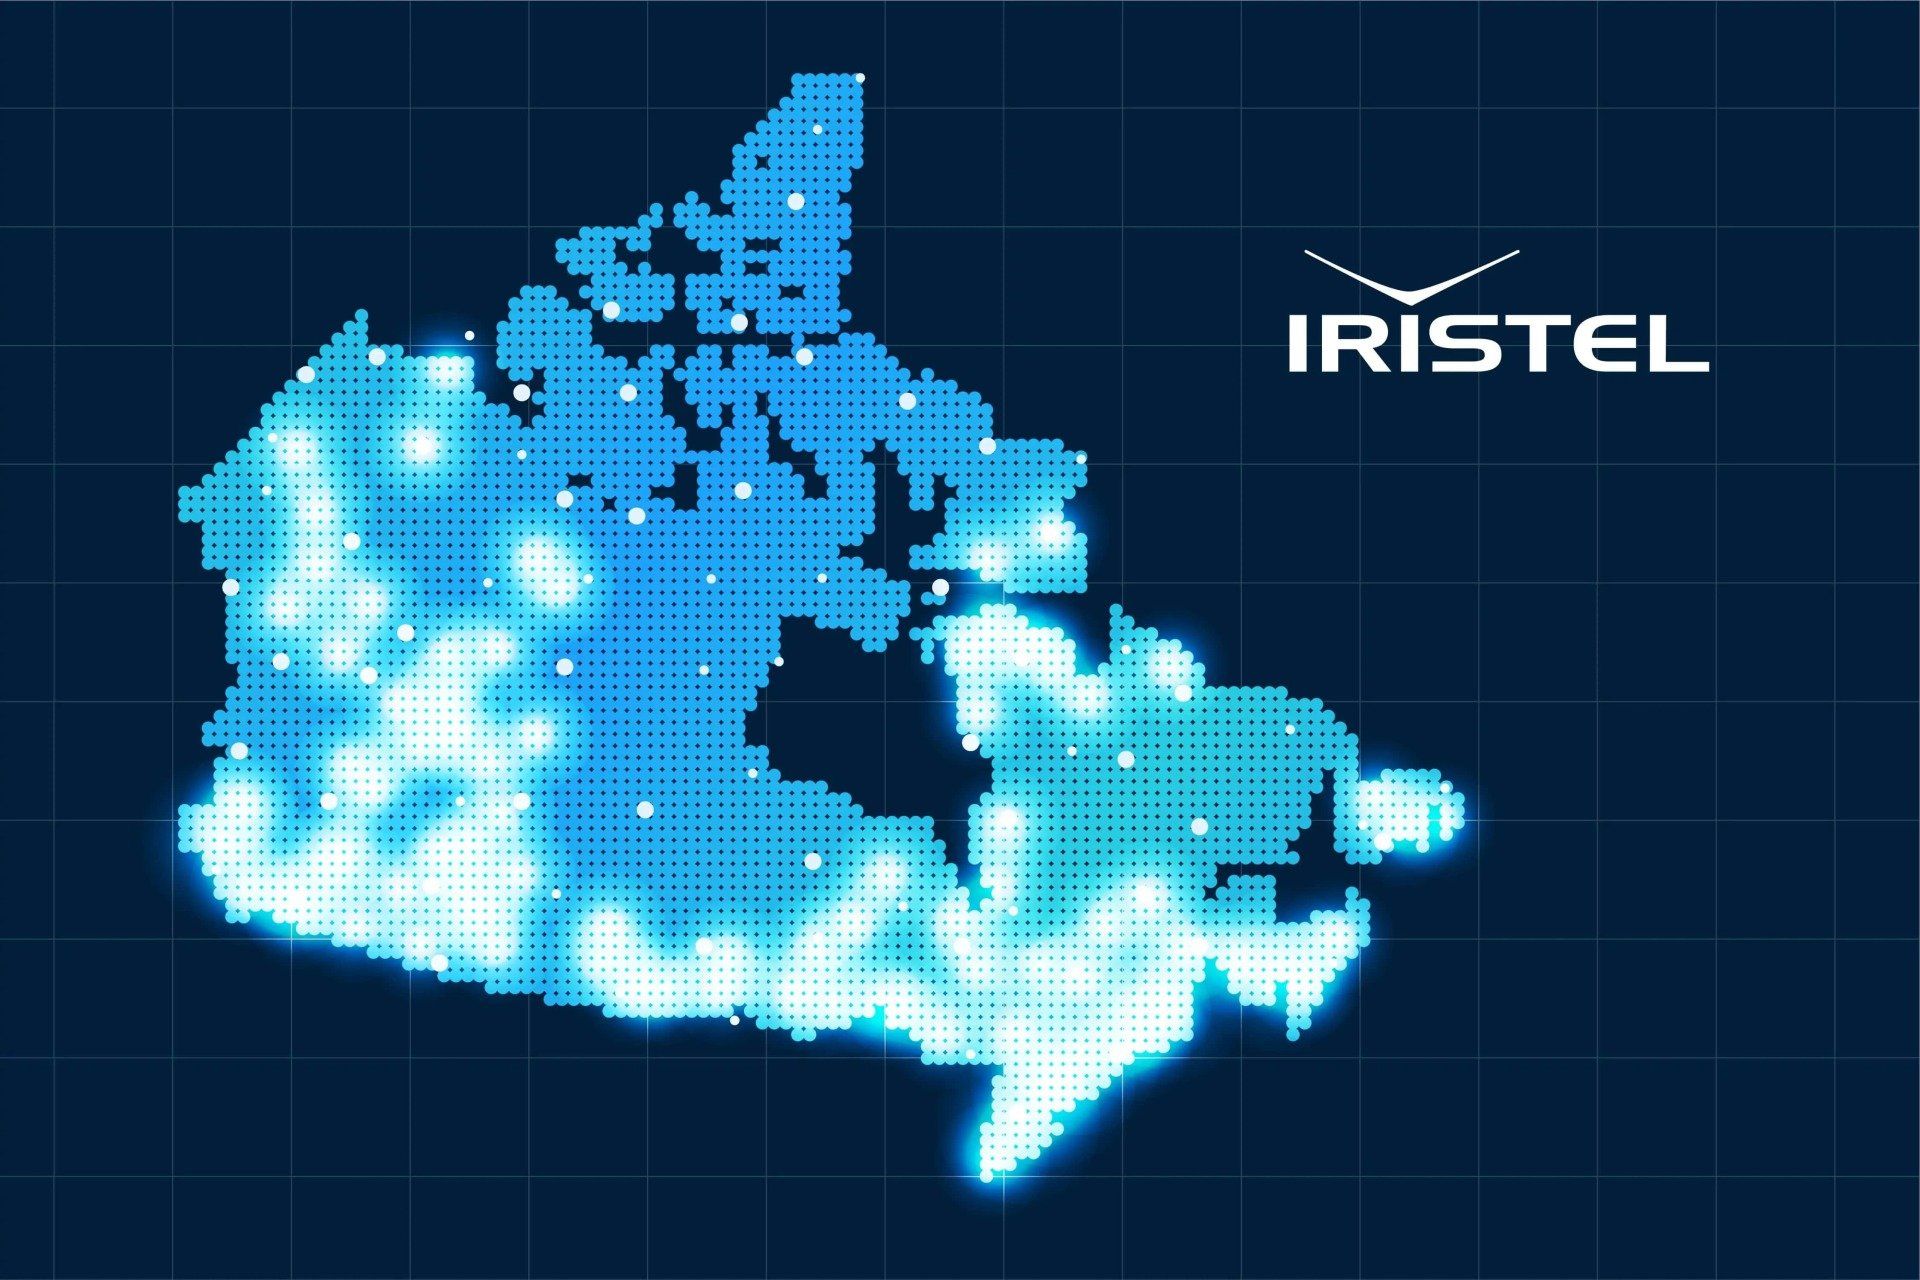 Iristel Network